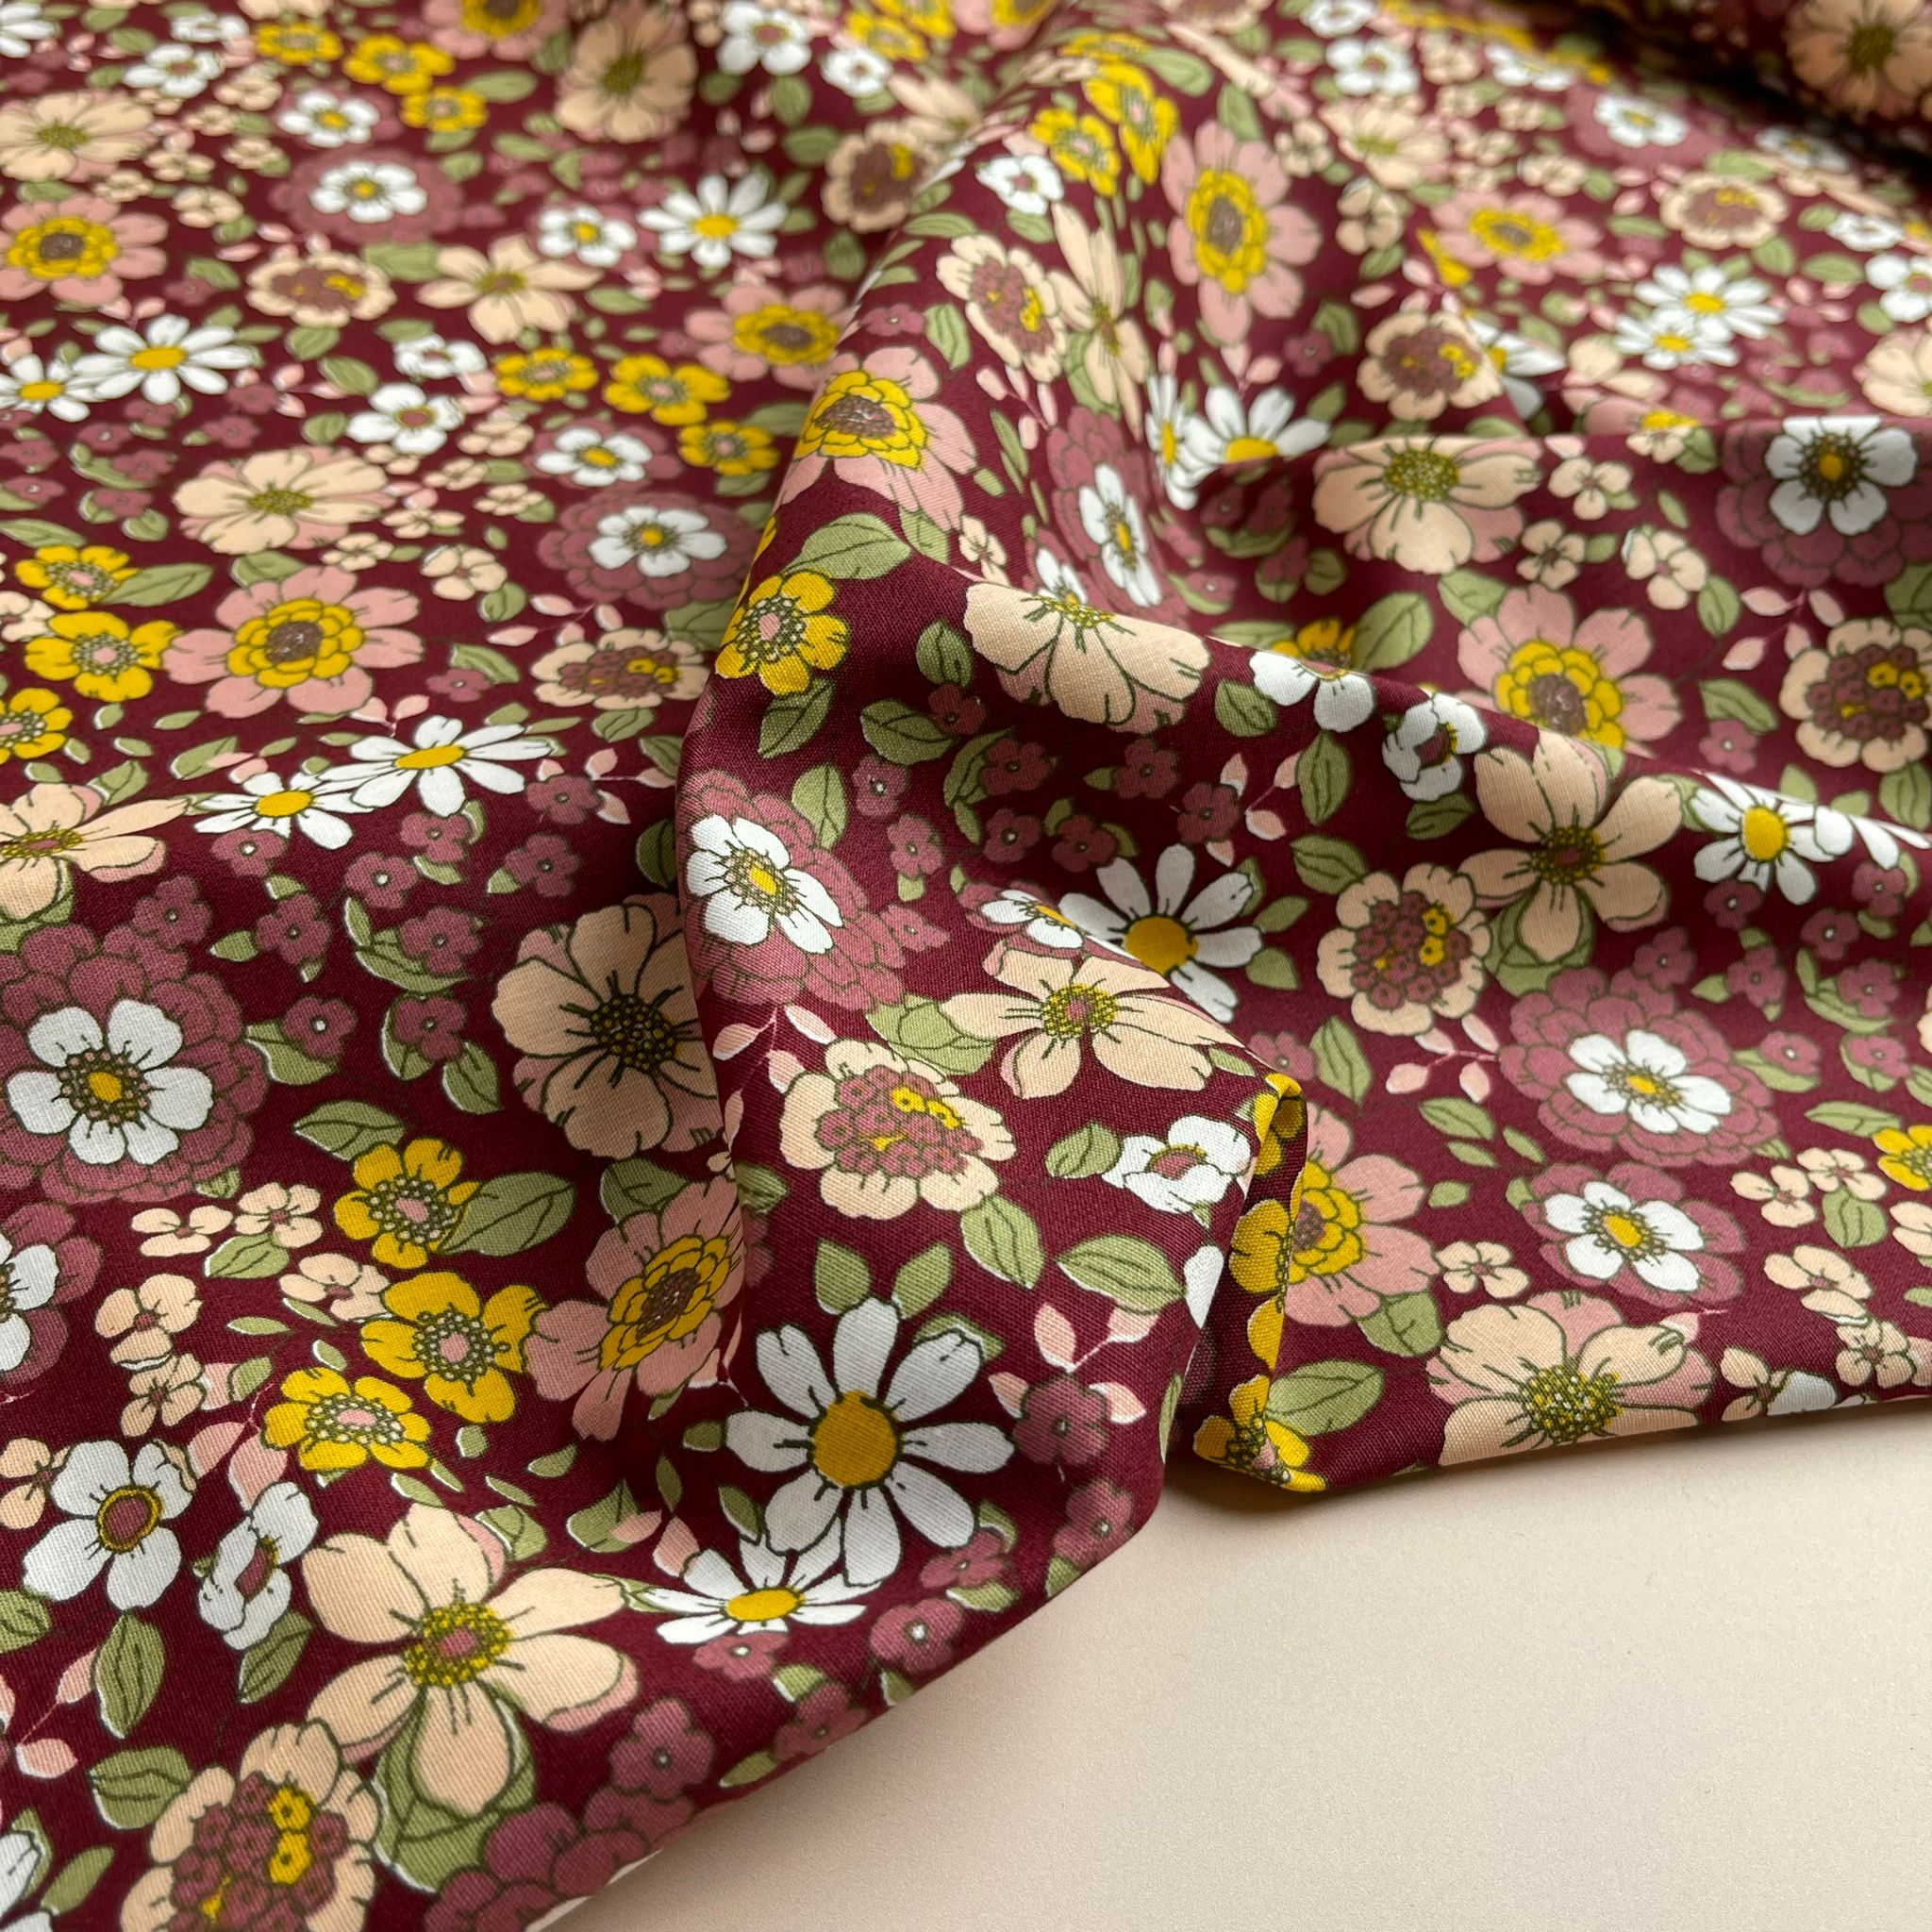 Blooms on Burgundy Cotton Poplin Fabric